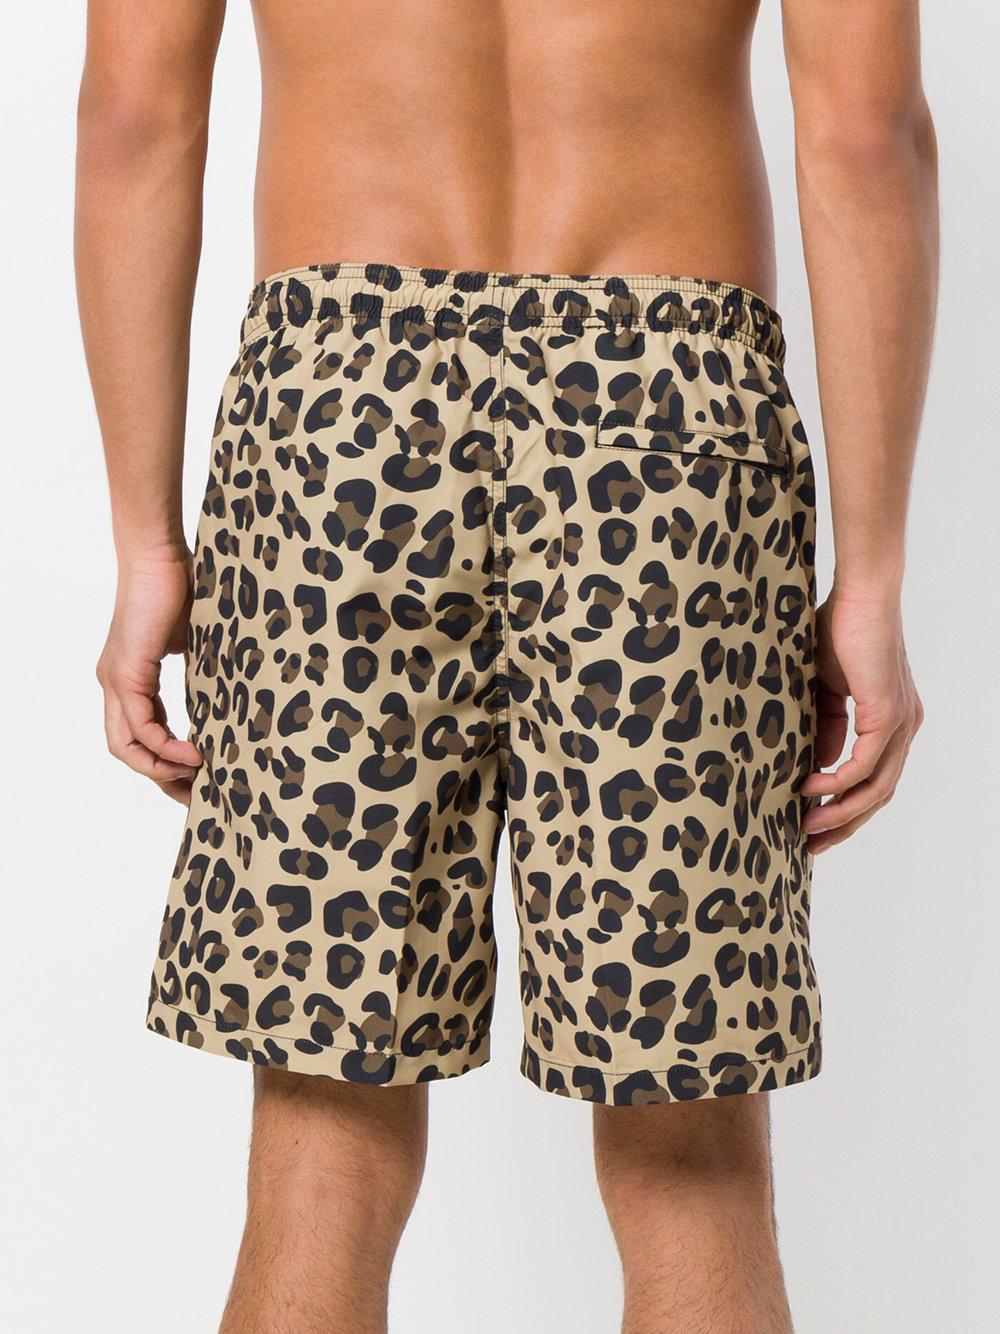 Stussy Leopard Print Swim Shorts for Men - Lyst